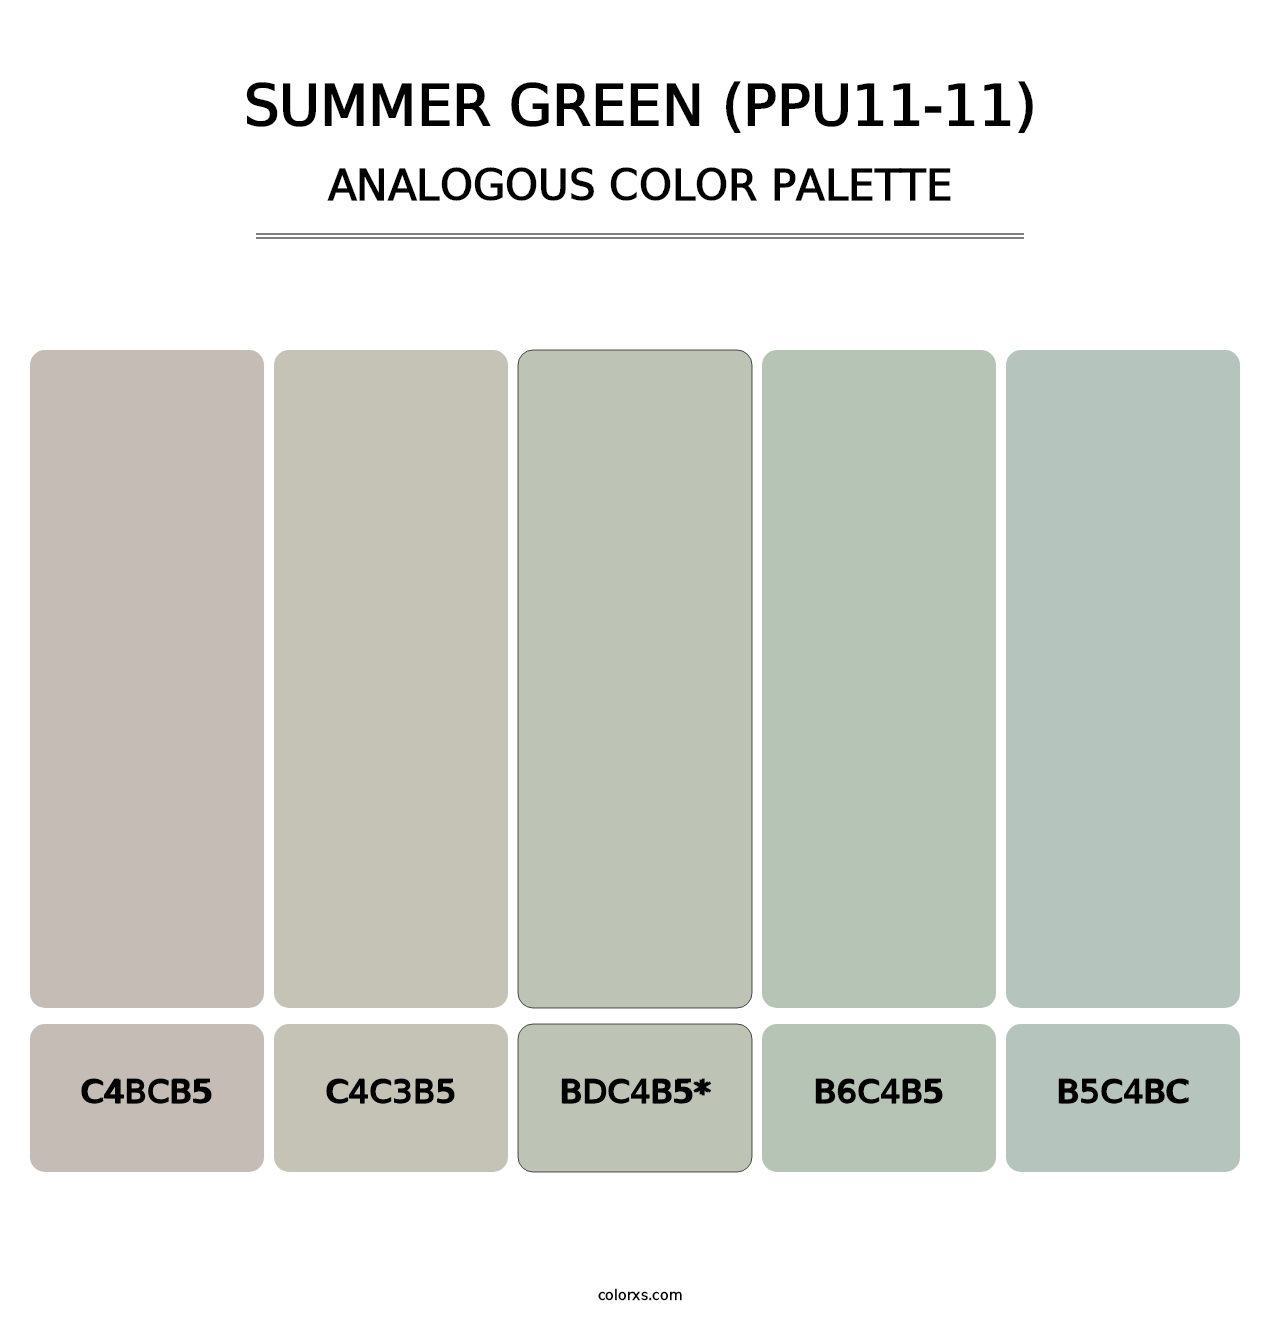 Summer Green (PPU11-11) - Analogous Color Palette